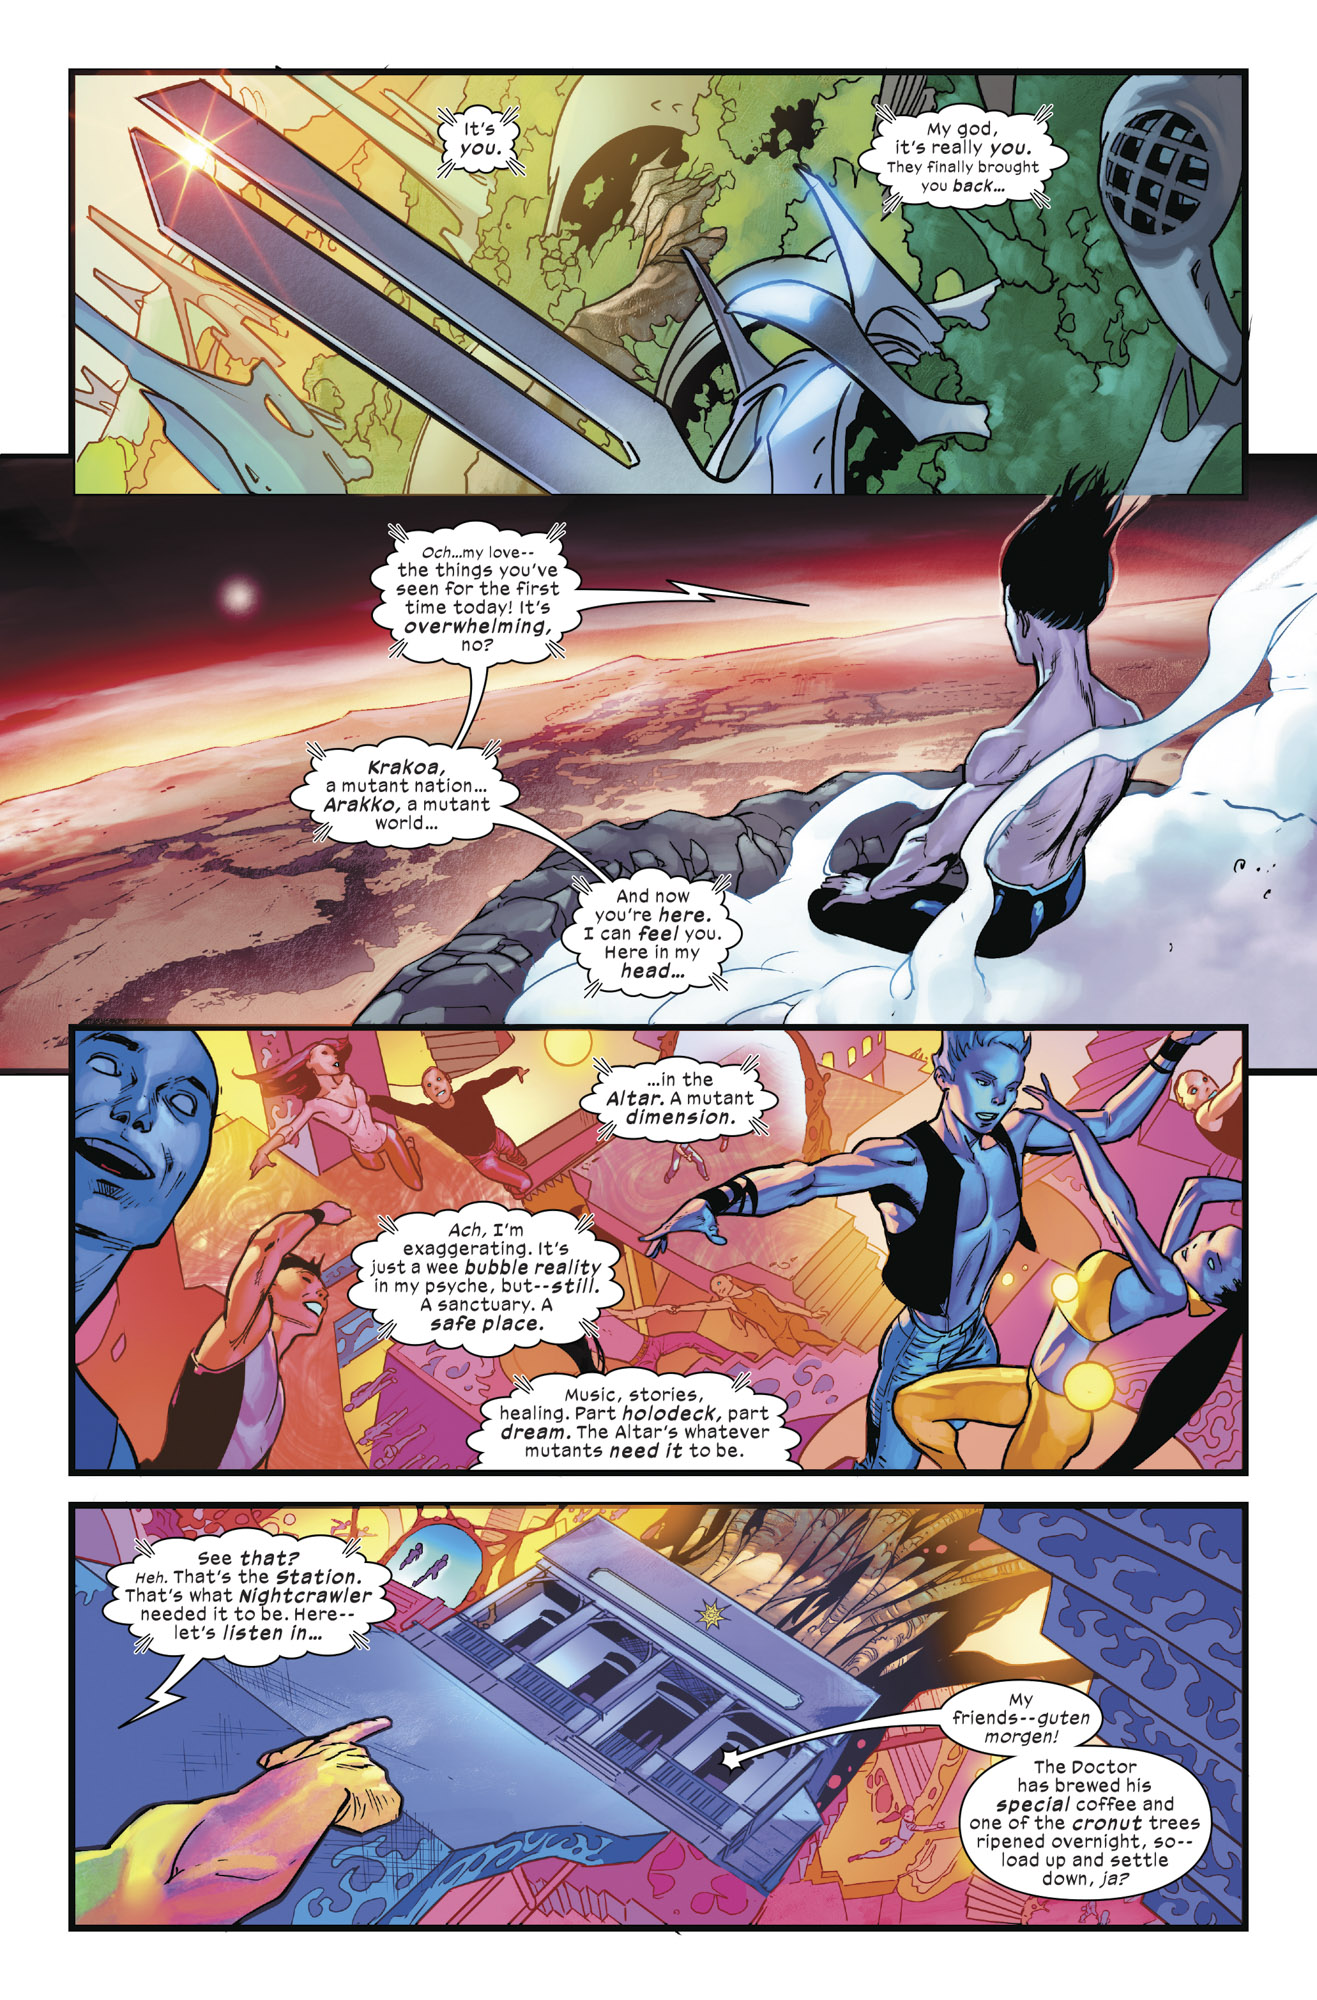 Legion Marvel Comics Series Wallpapers